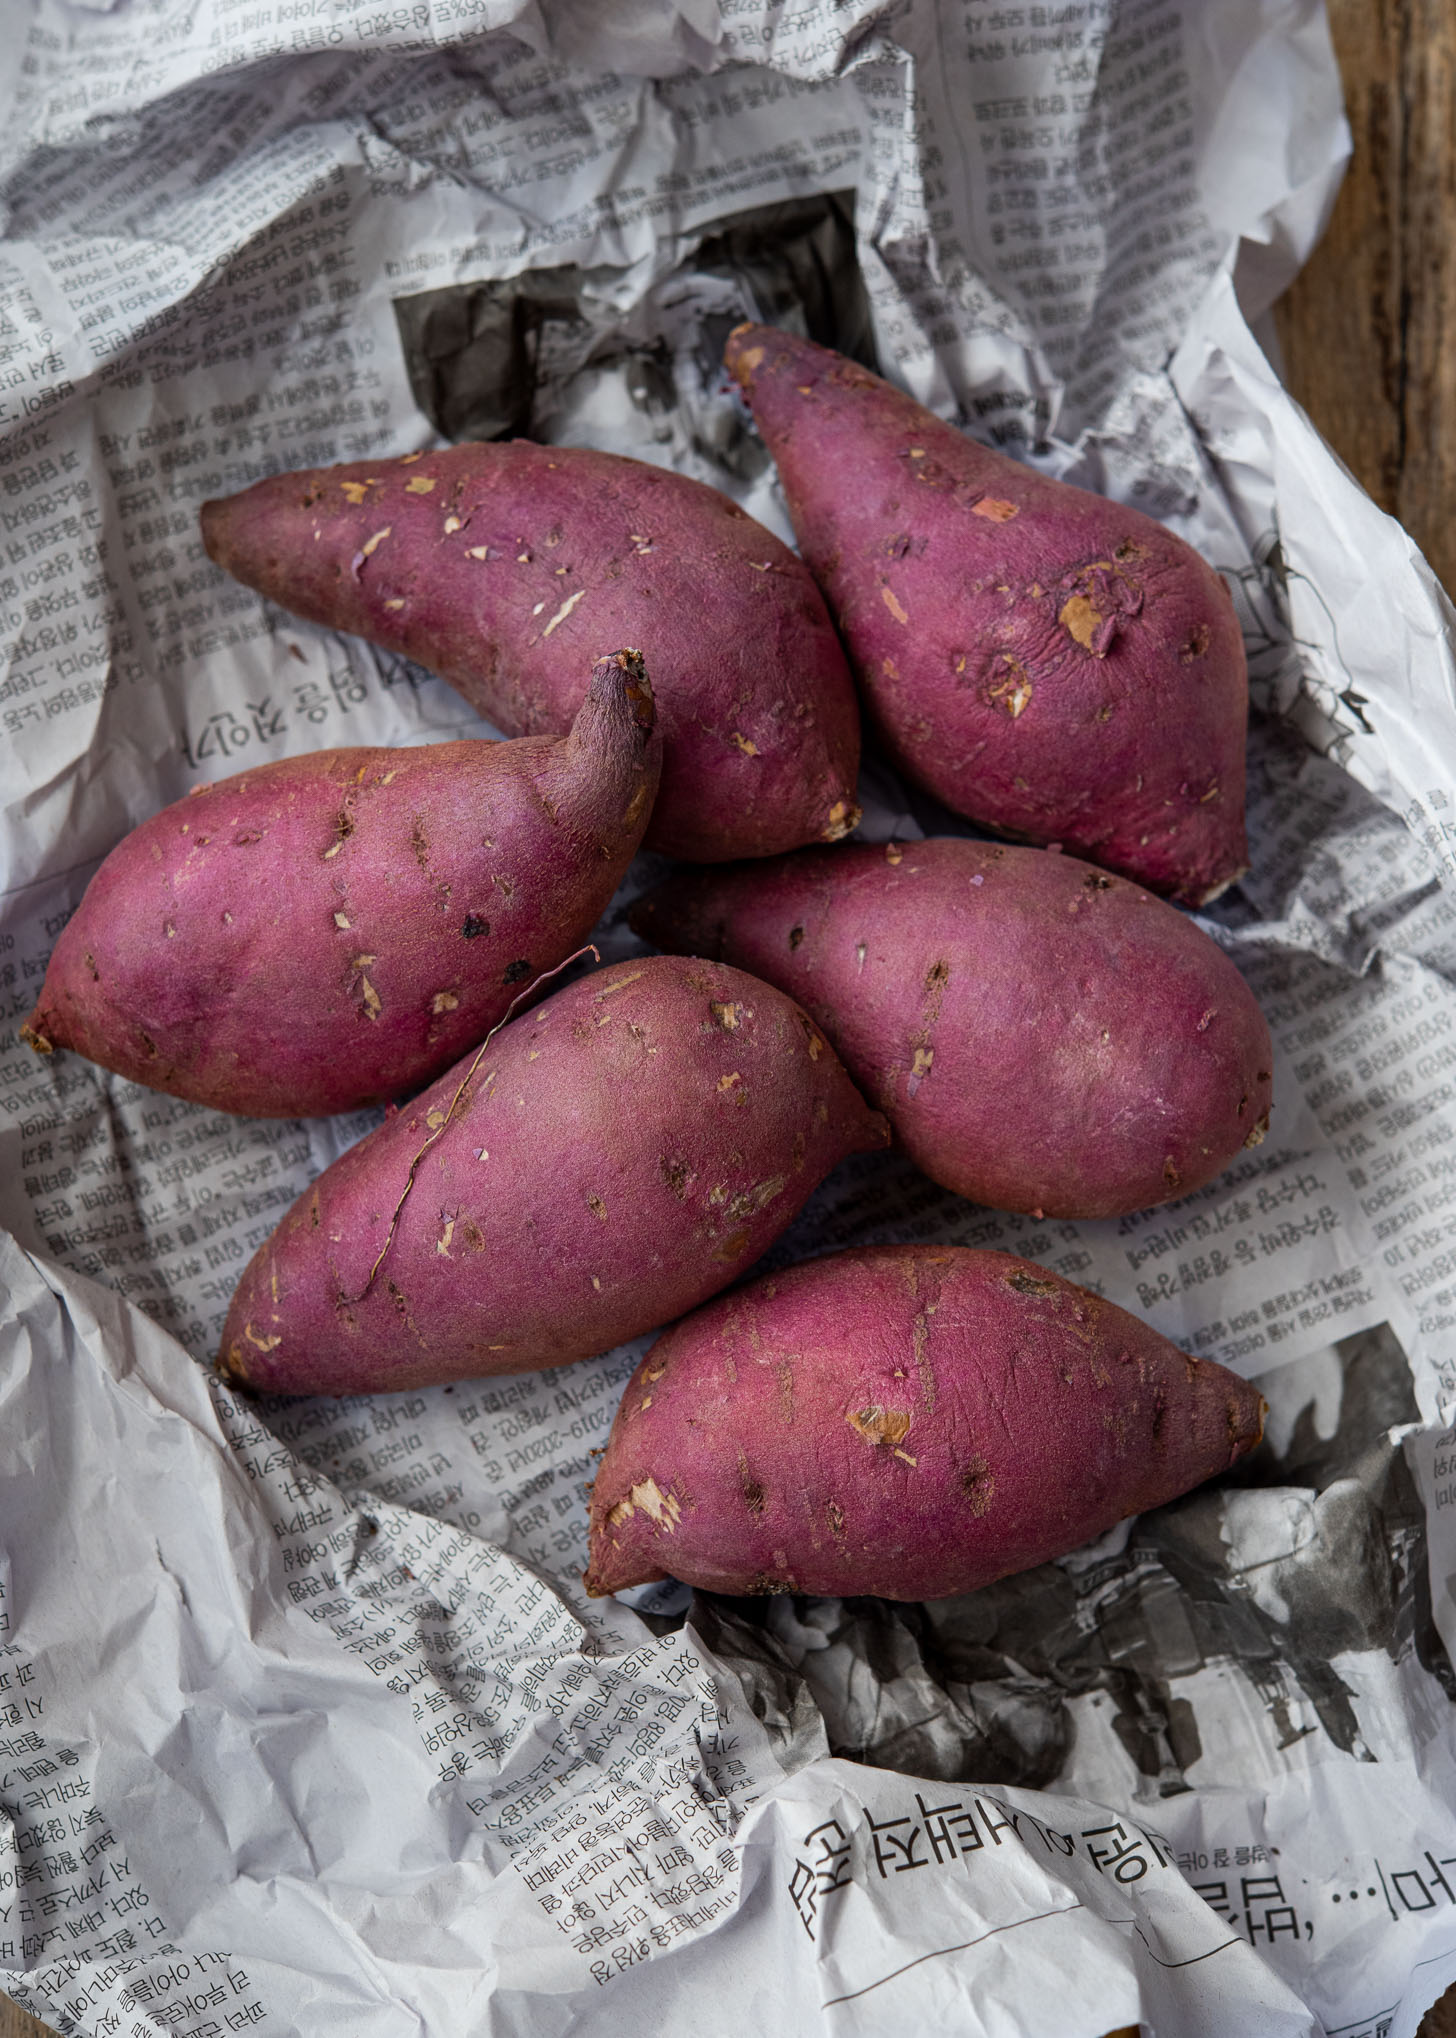 Korean sweet potatoes have purple skin on the outside.